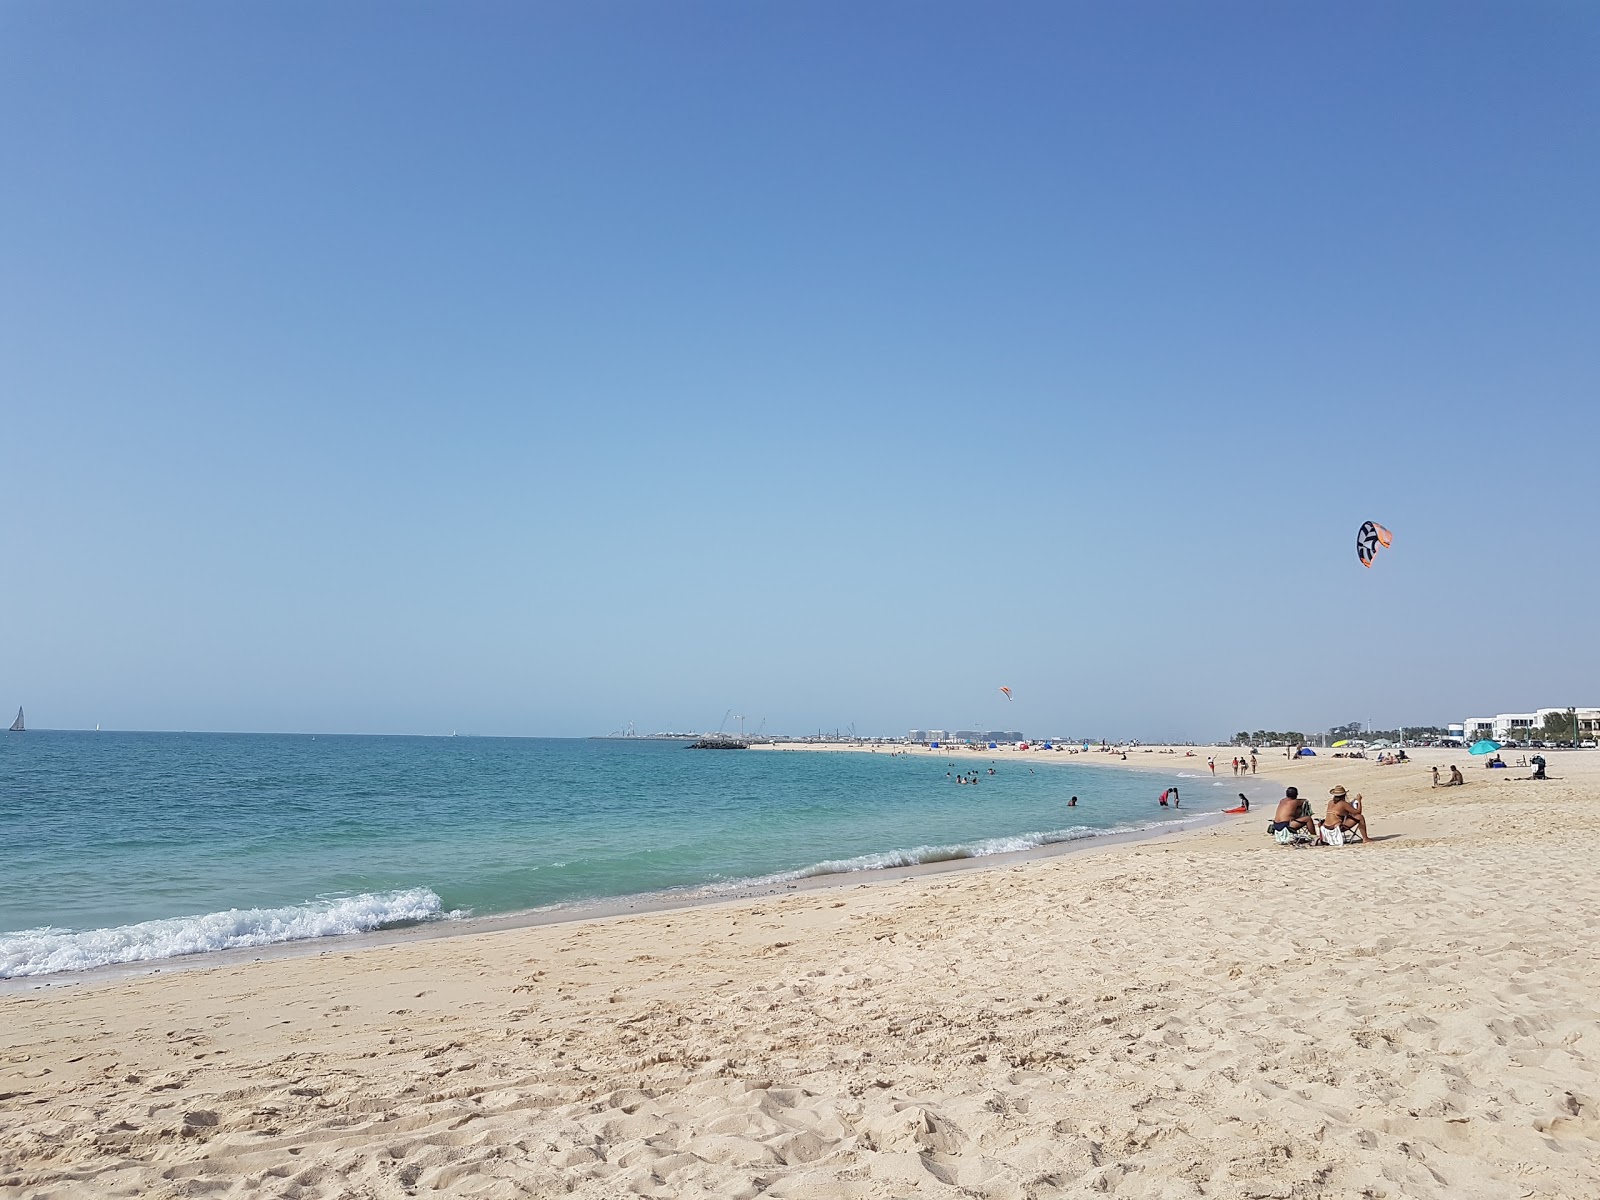 Foto av Jumeirah Kite beach med hög nivå av renlighet